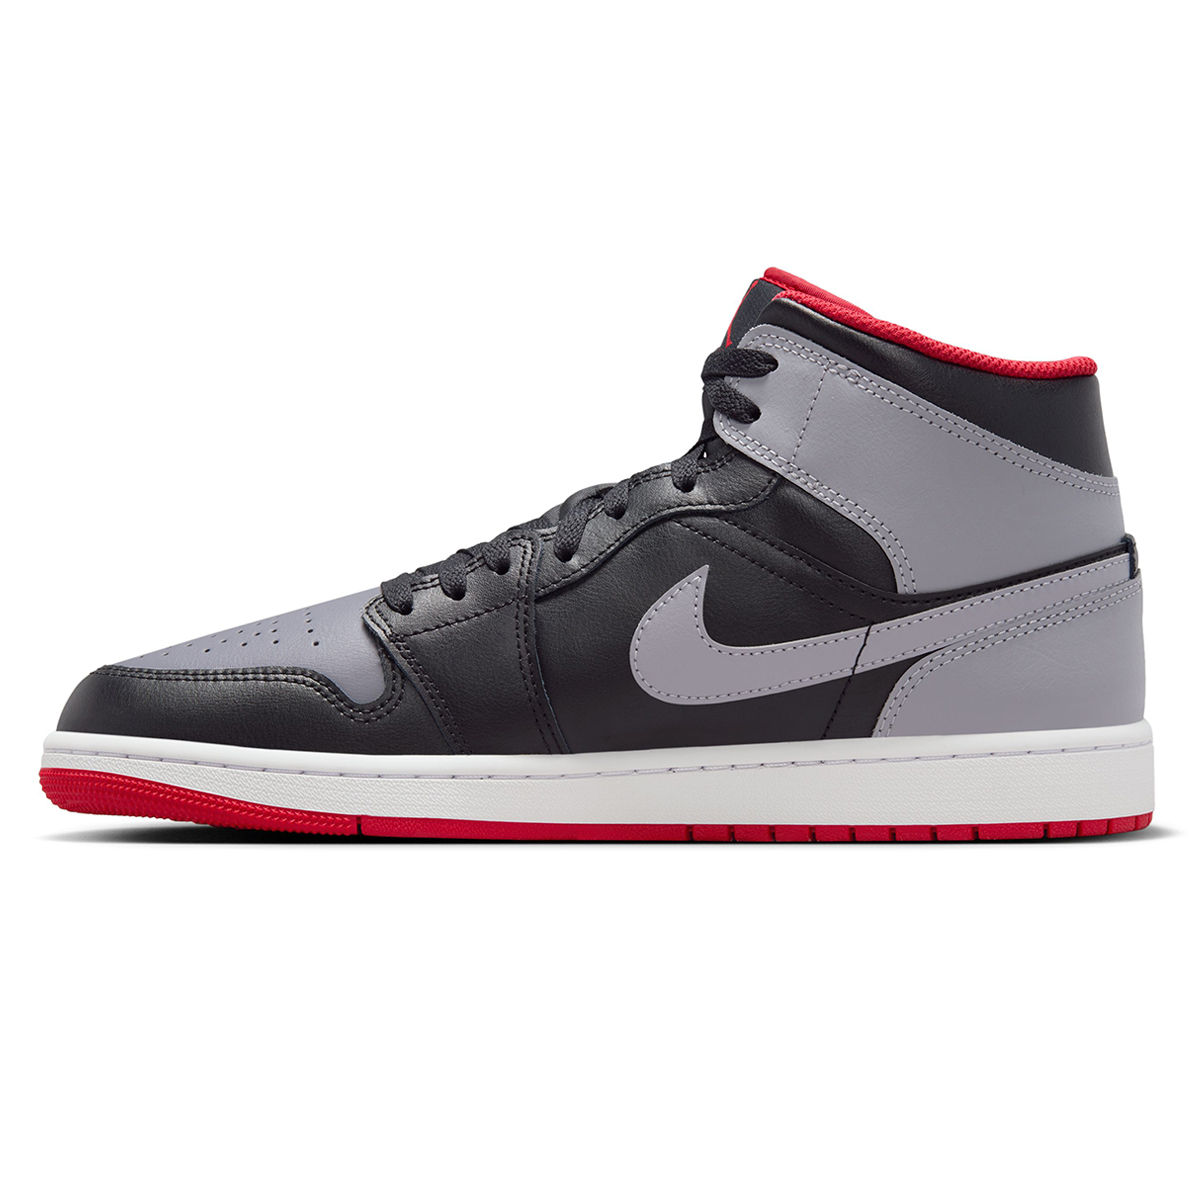 Zapatillas Nike Air Jordan 1 Mid Hombre,  image number null